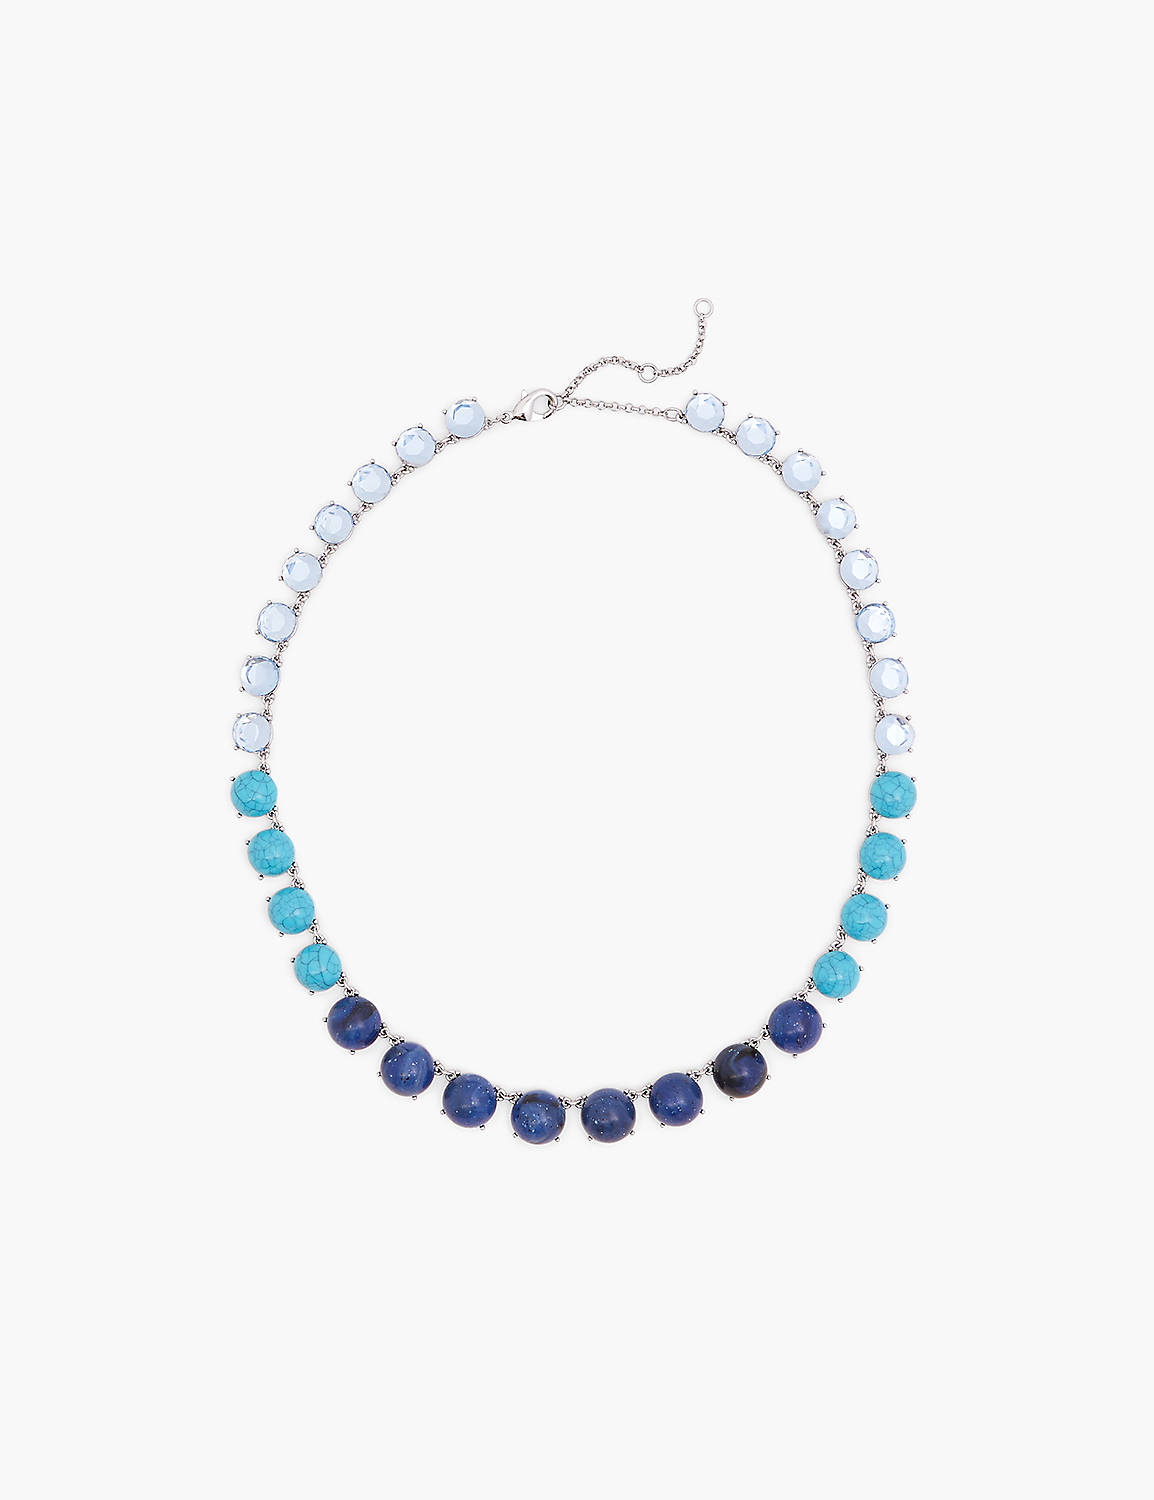 Blue Stone Single Row Necklace Product Image 1